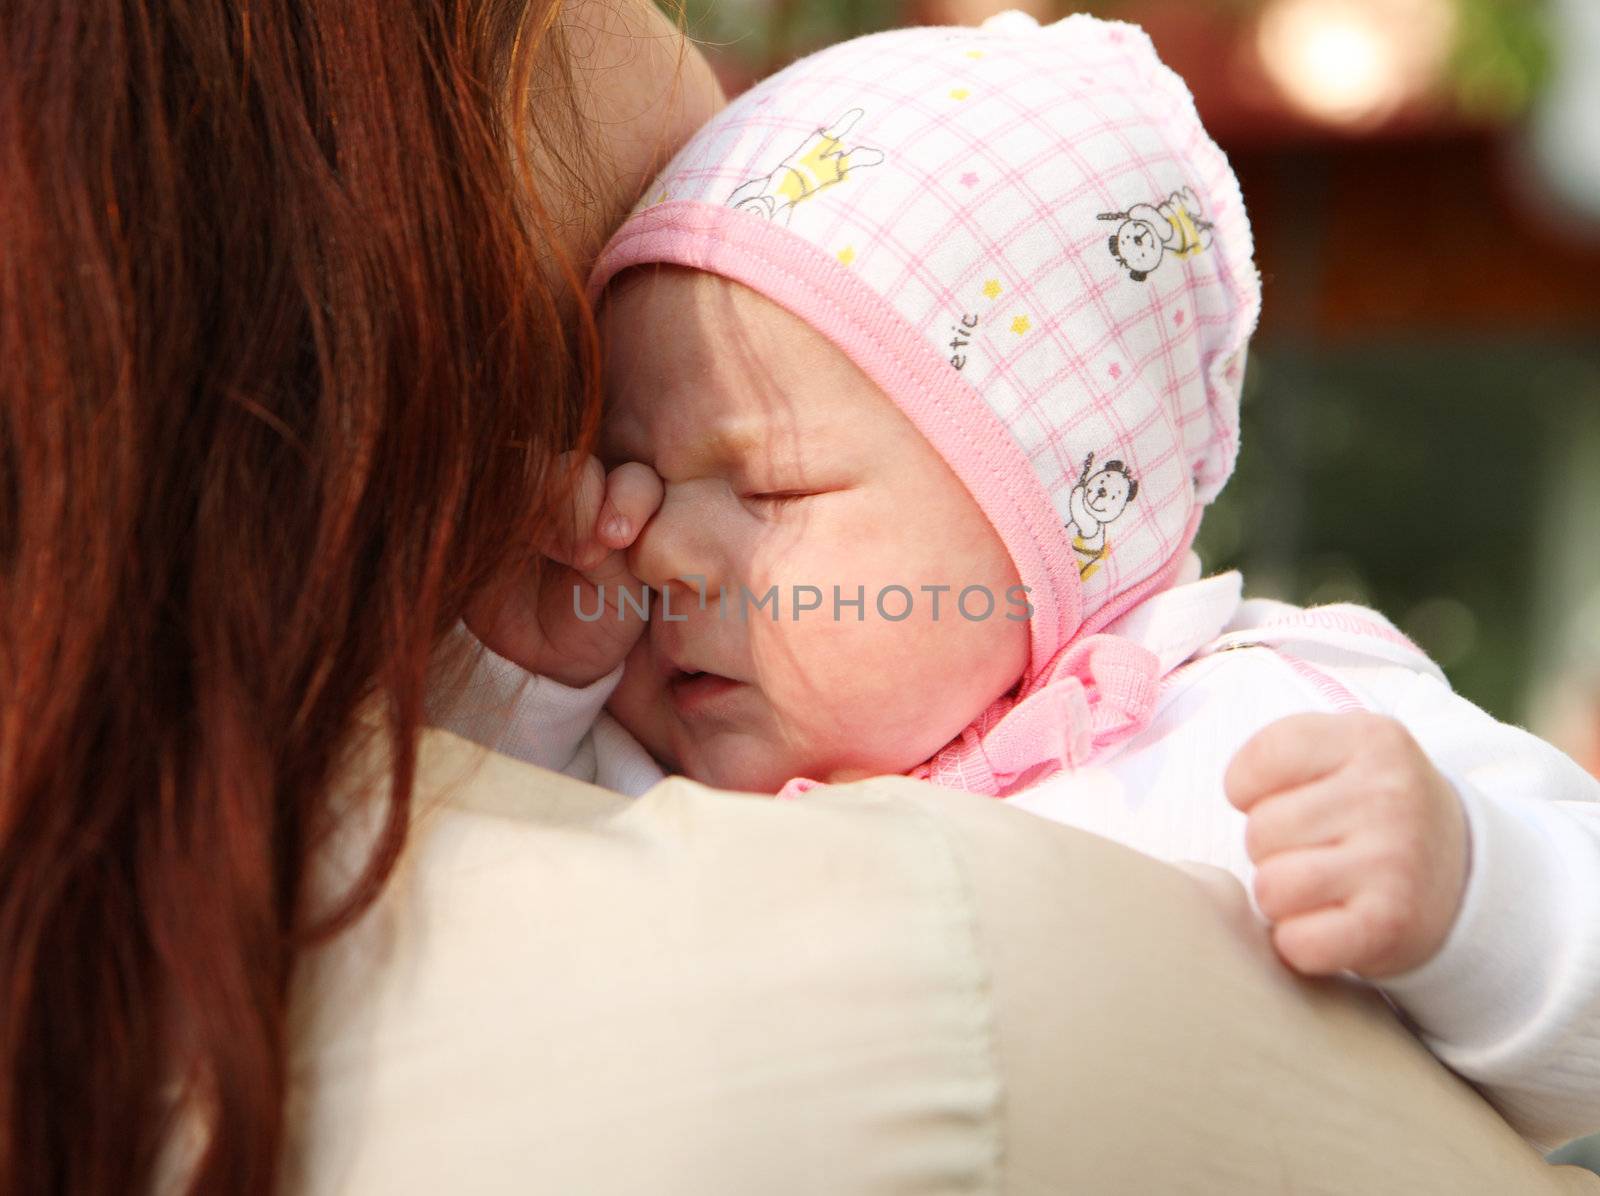 The newborn girl on mum's hands
